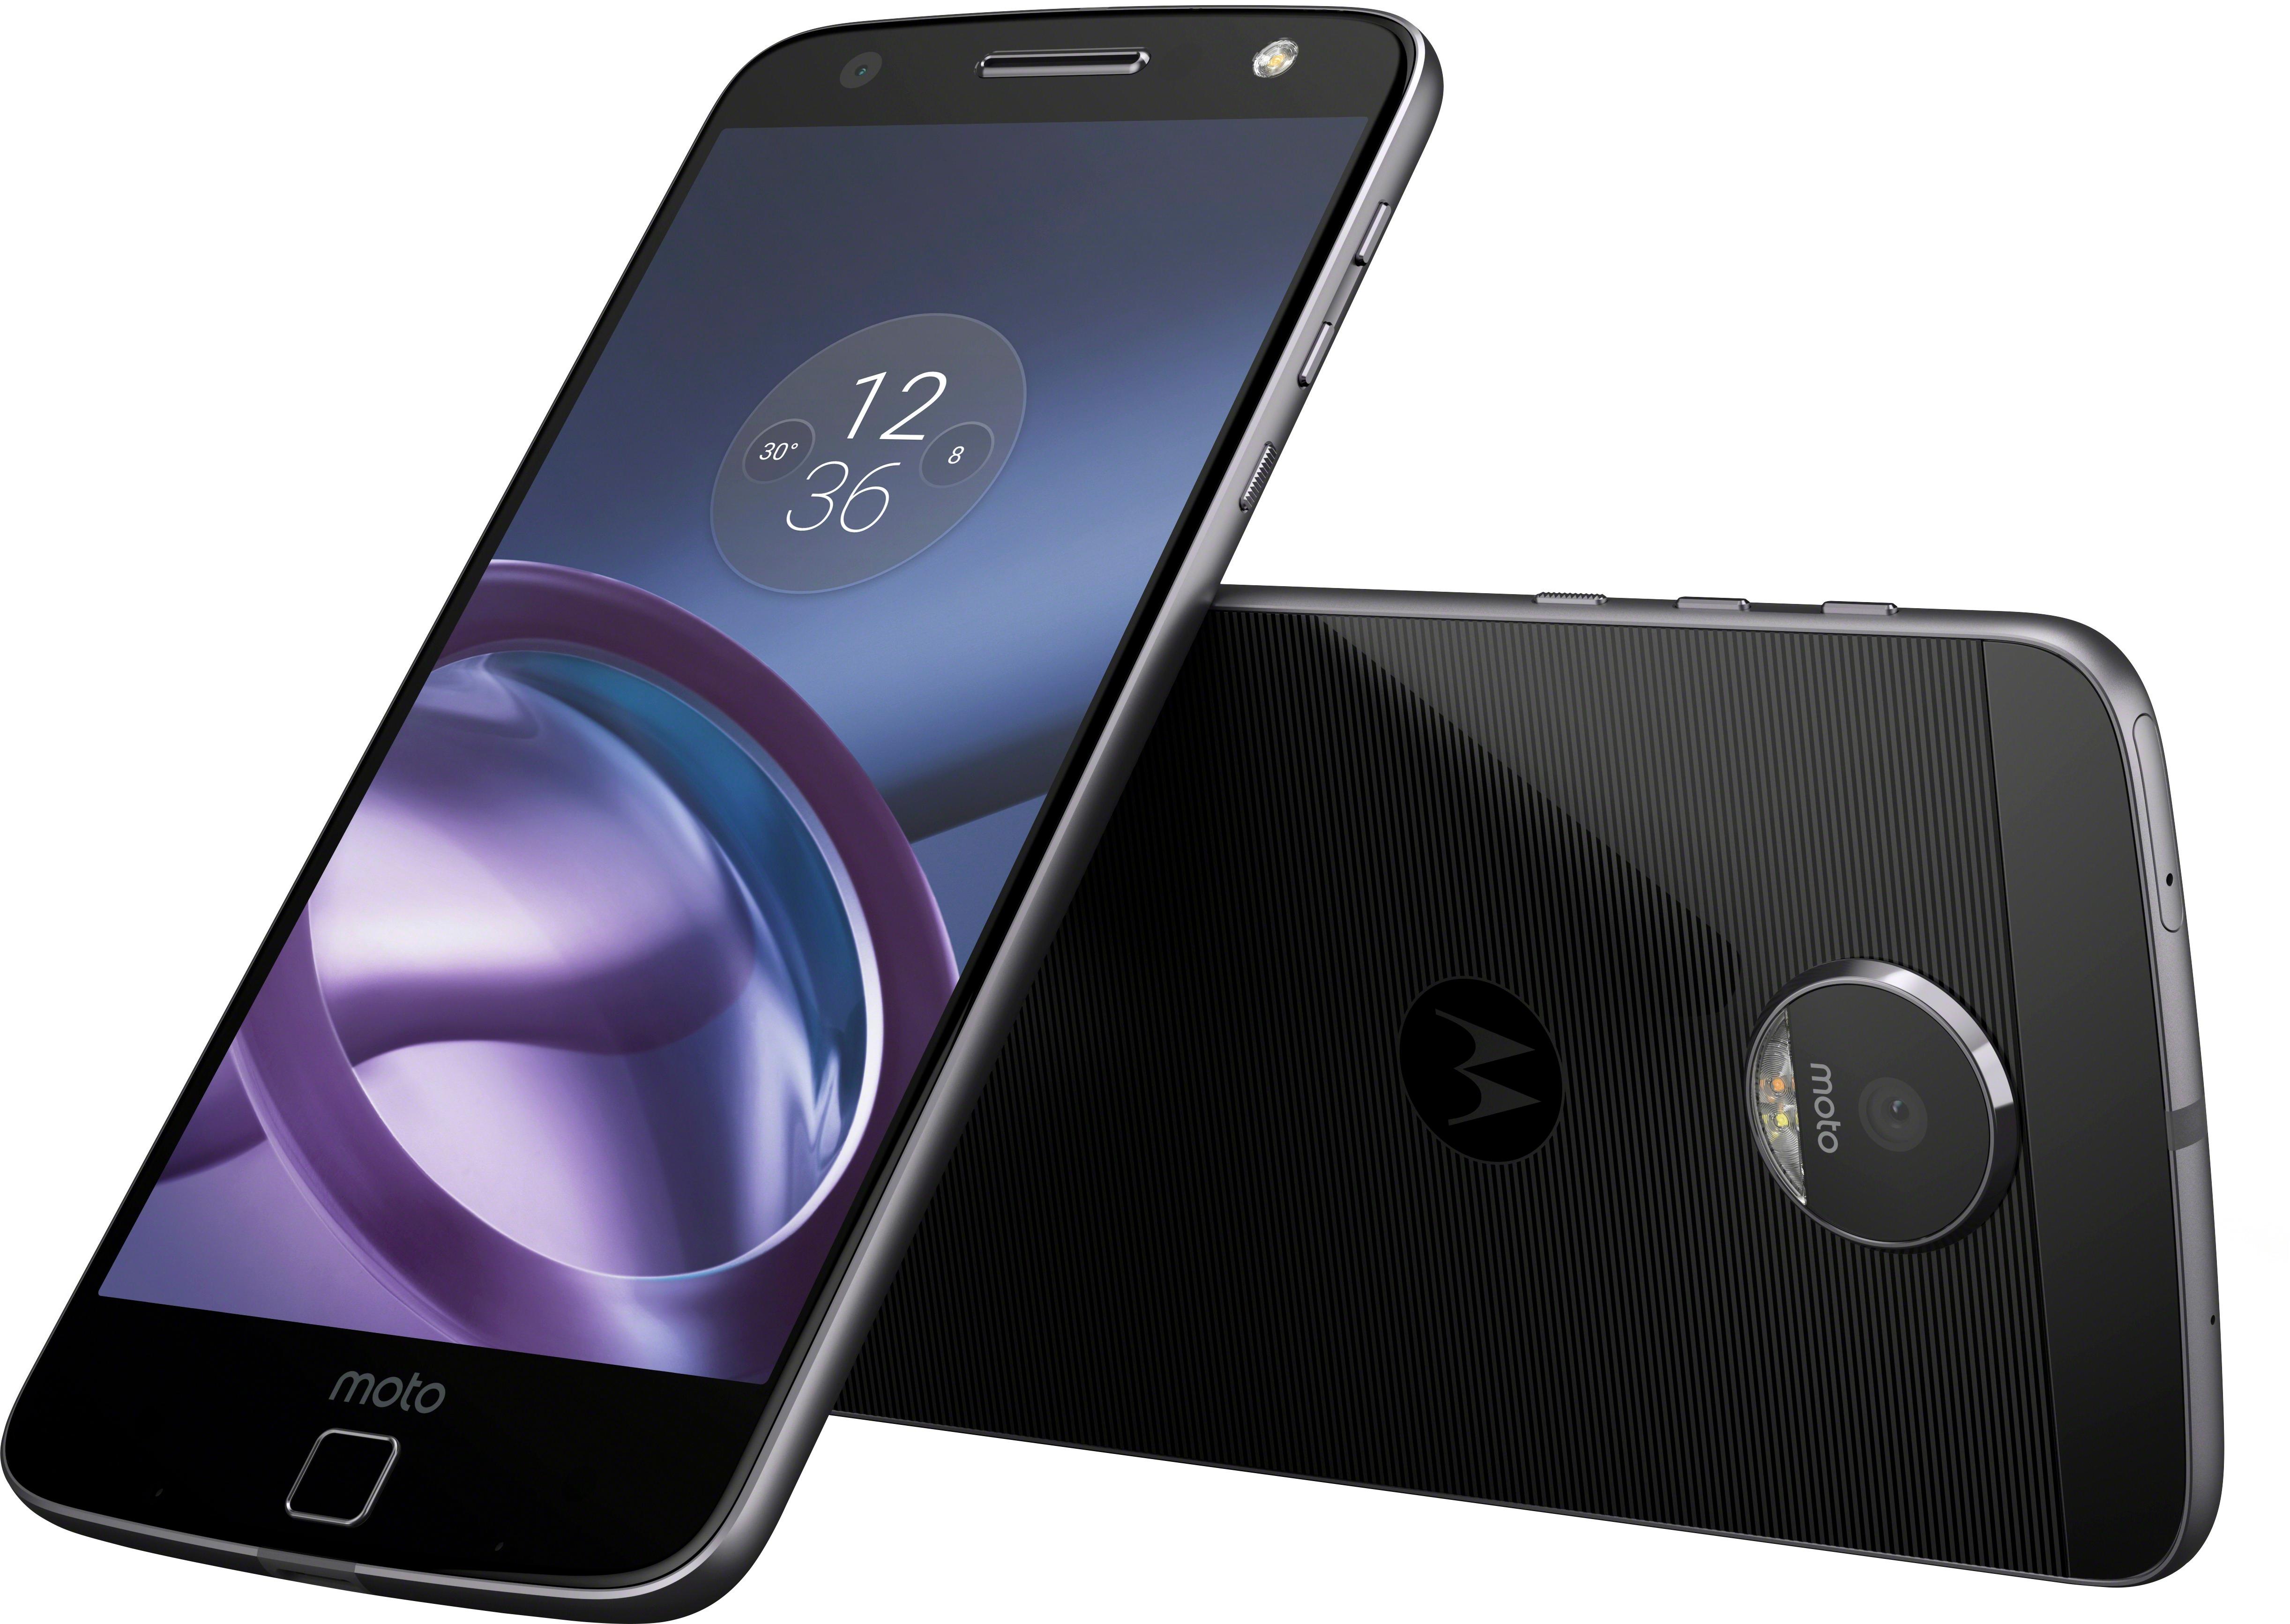 Customer Reviews: Motorola Moto Z 4G LTE with 64GB Memory Cell Phone ...